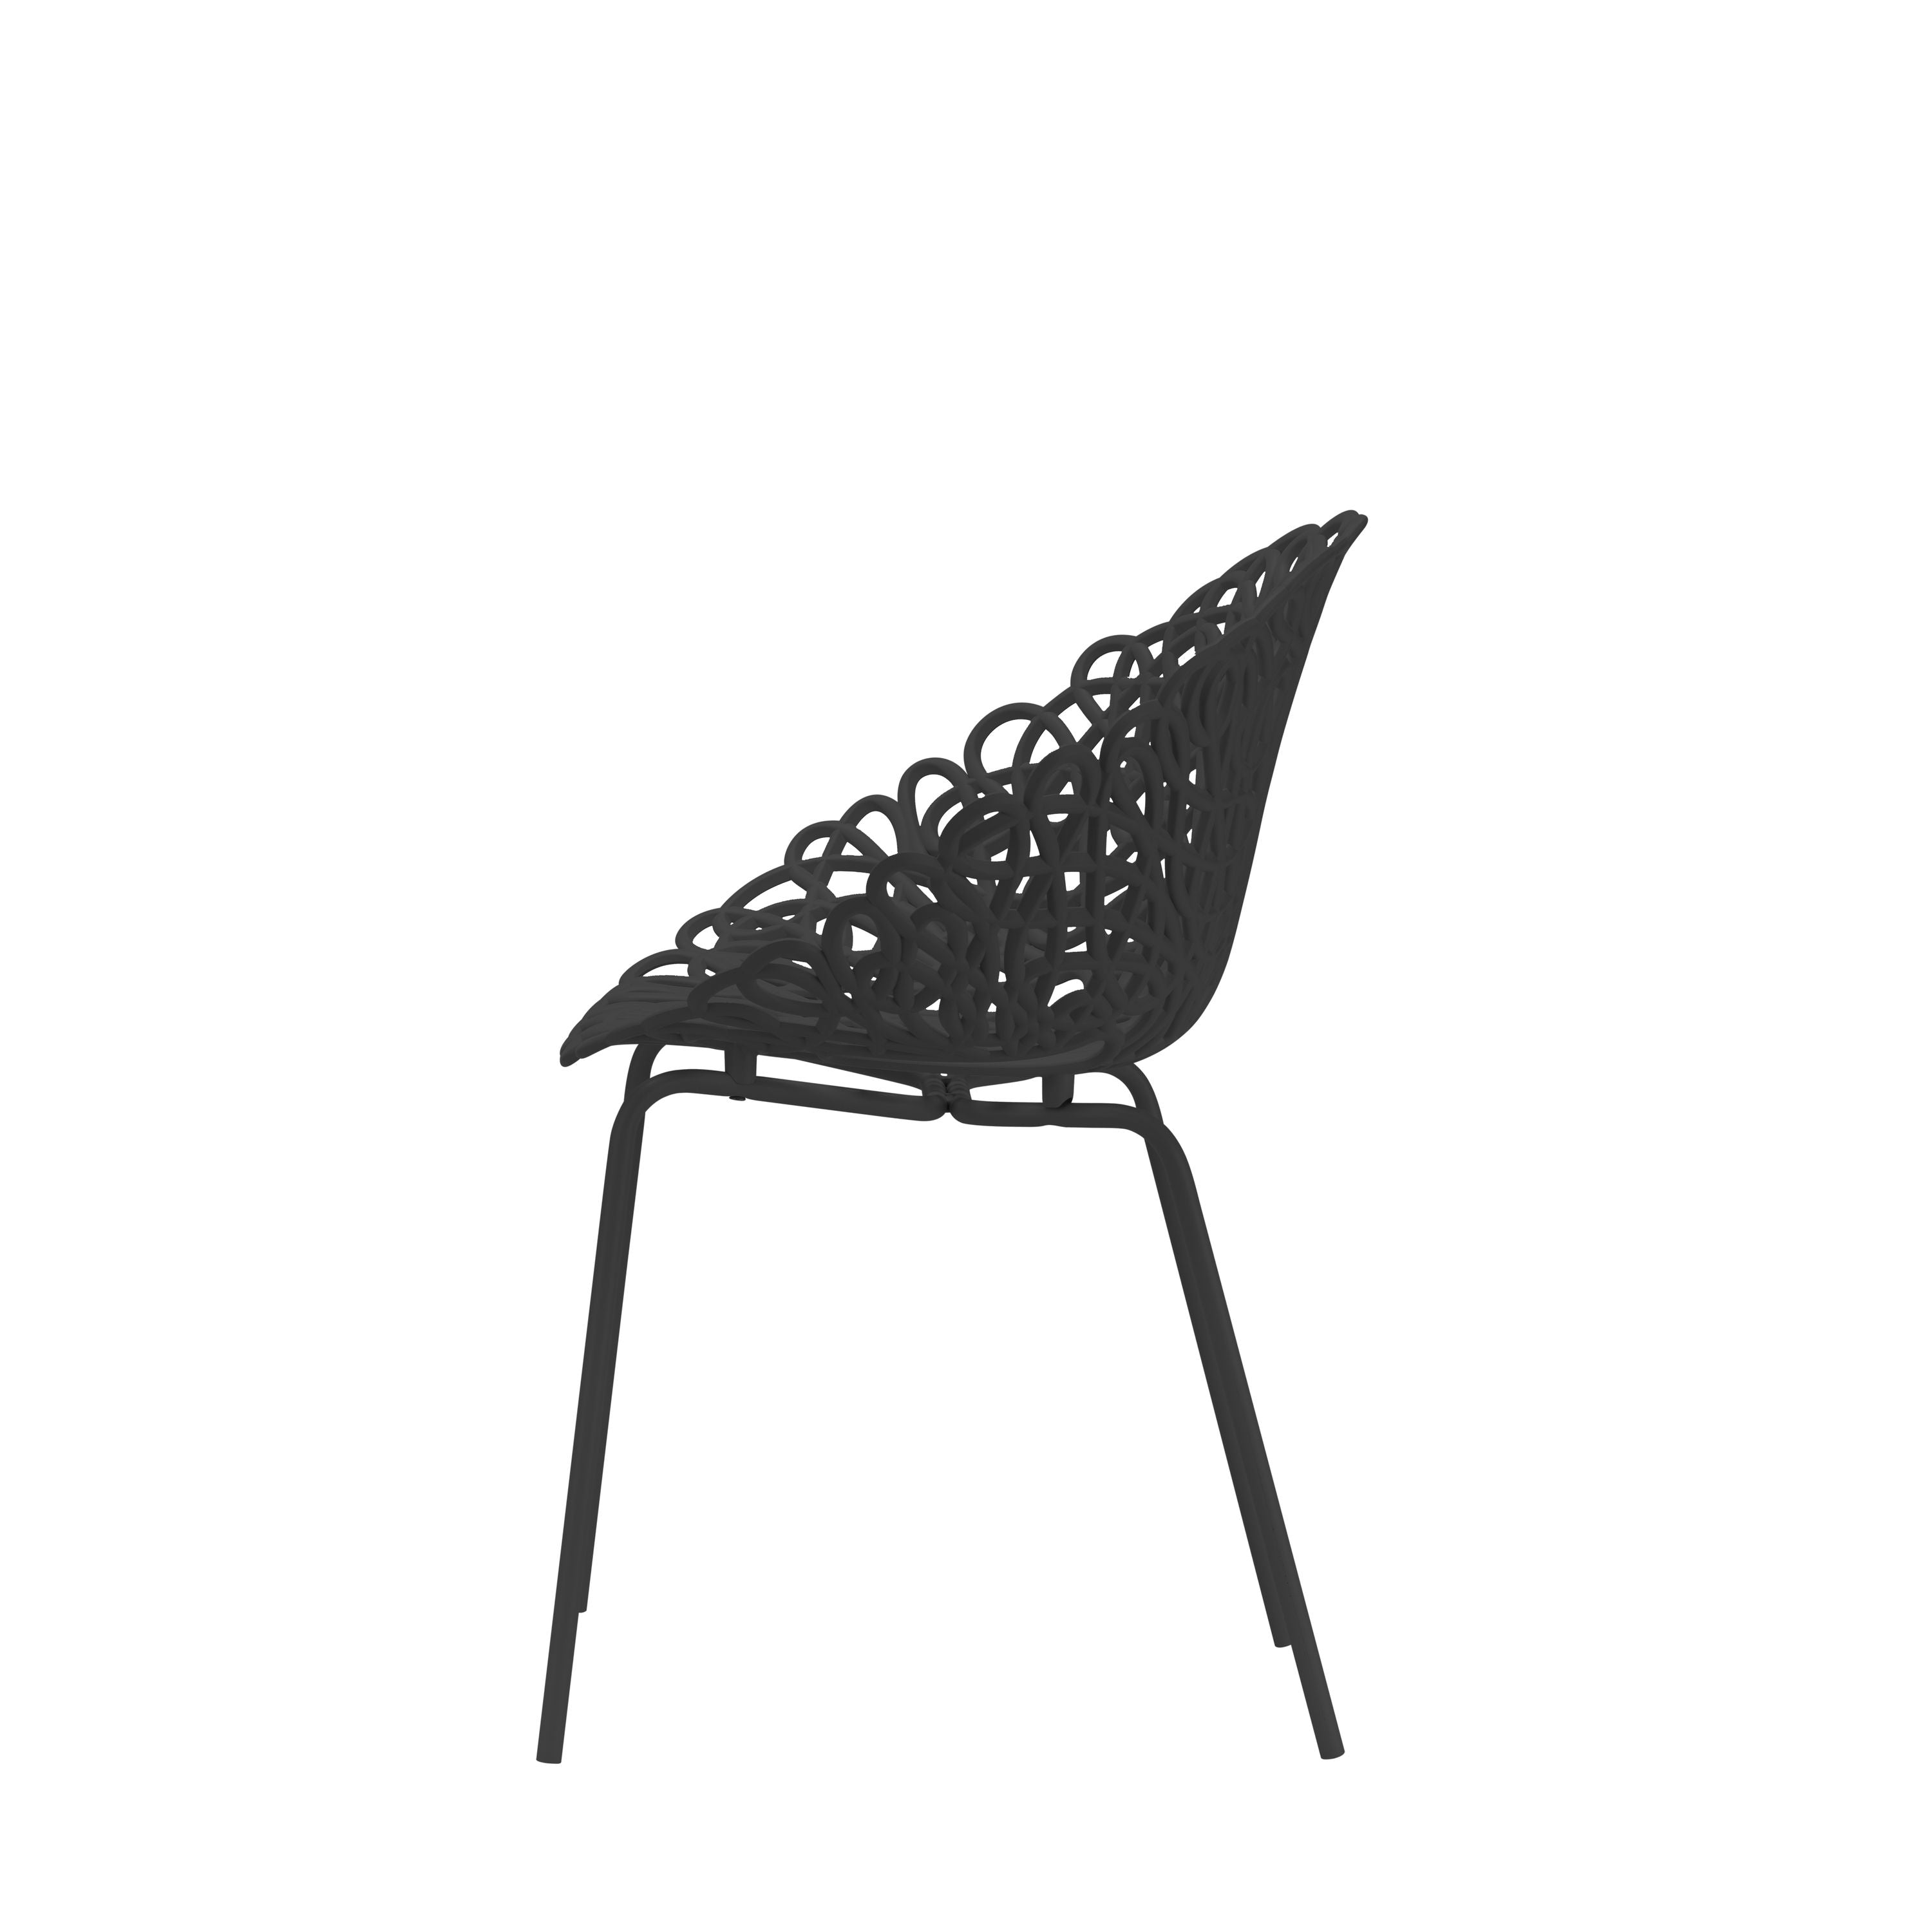 Qeeboo bacana stol innendørs sett med 2 stk, svart